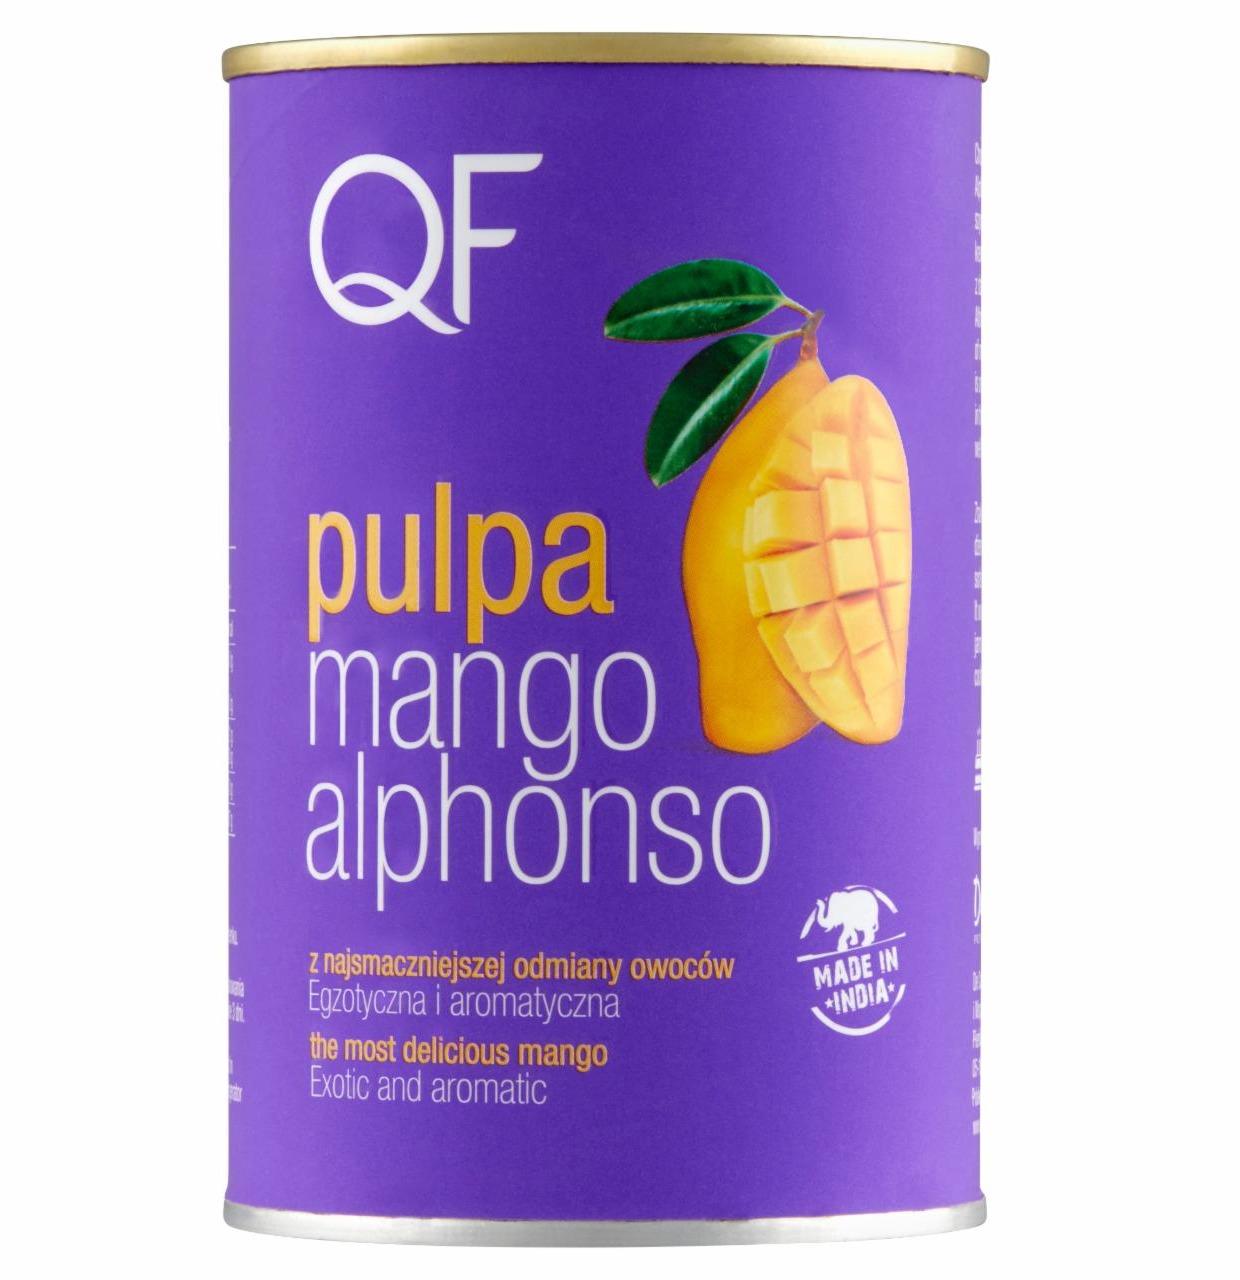 Zdjęcia - Pulpa mango alphonso QF